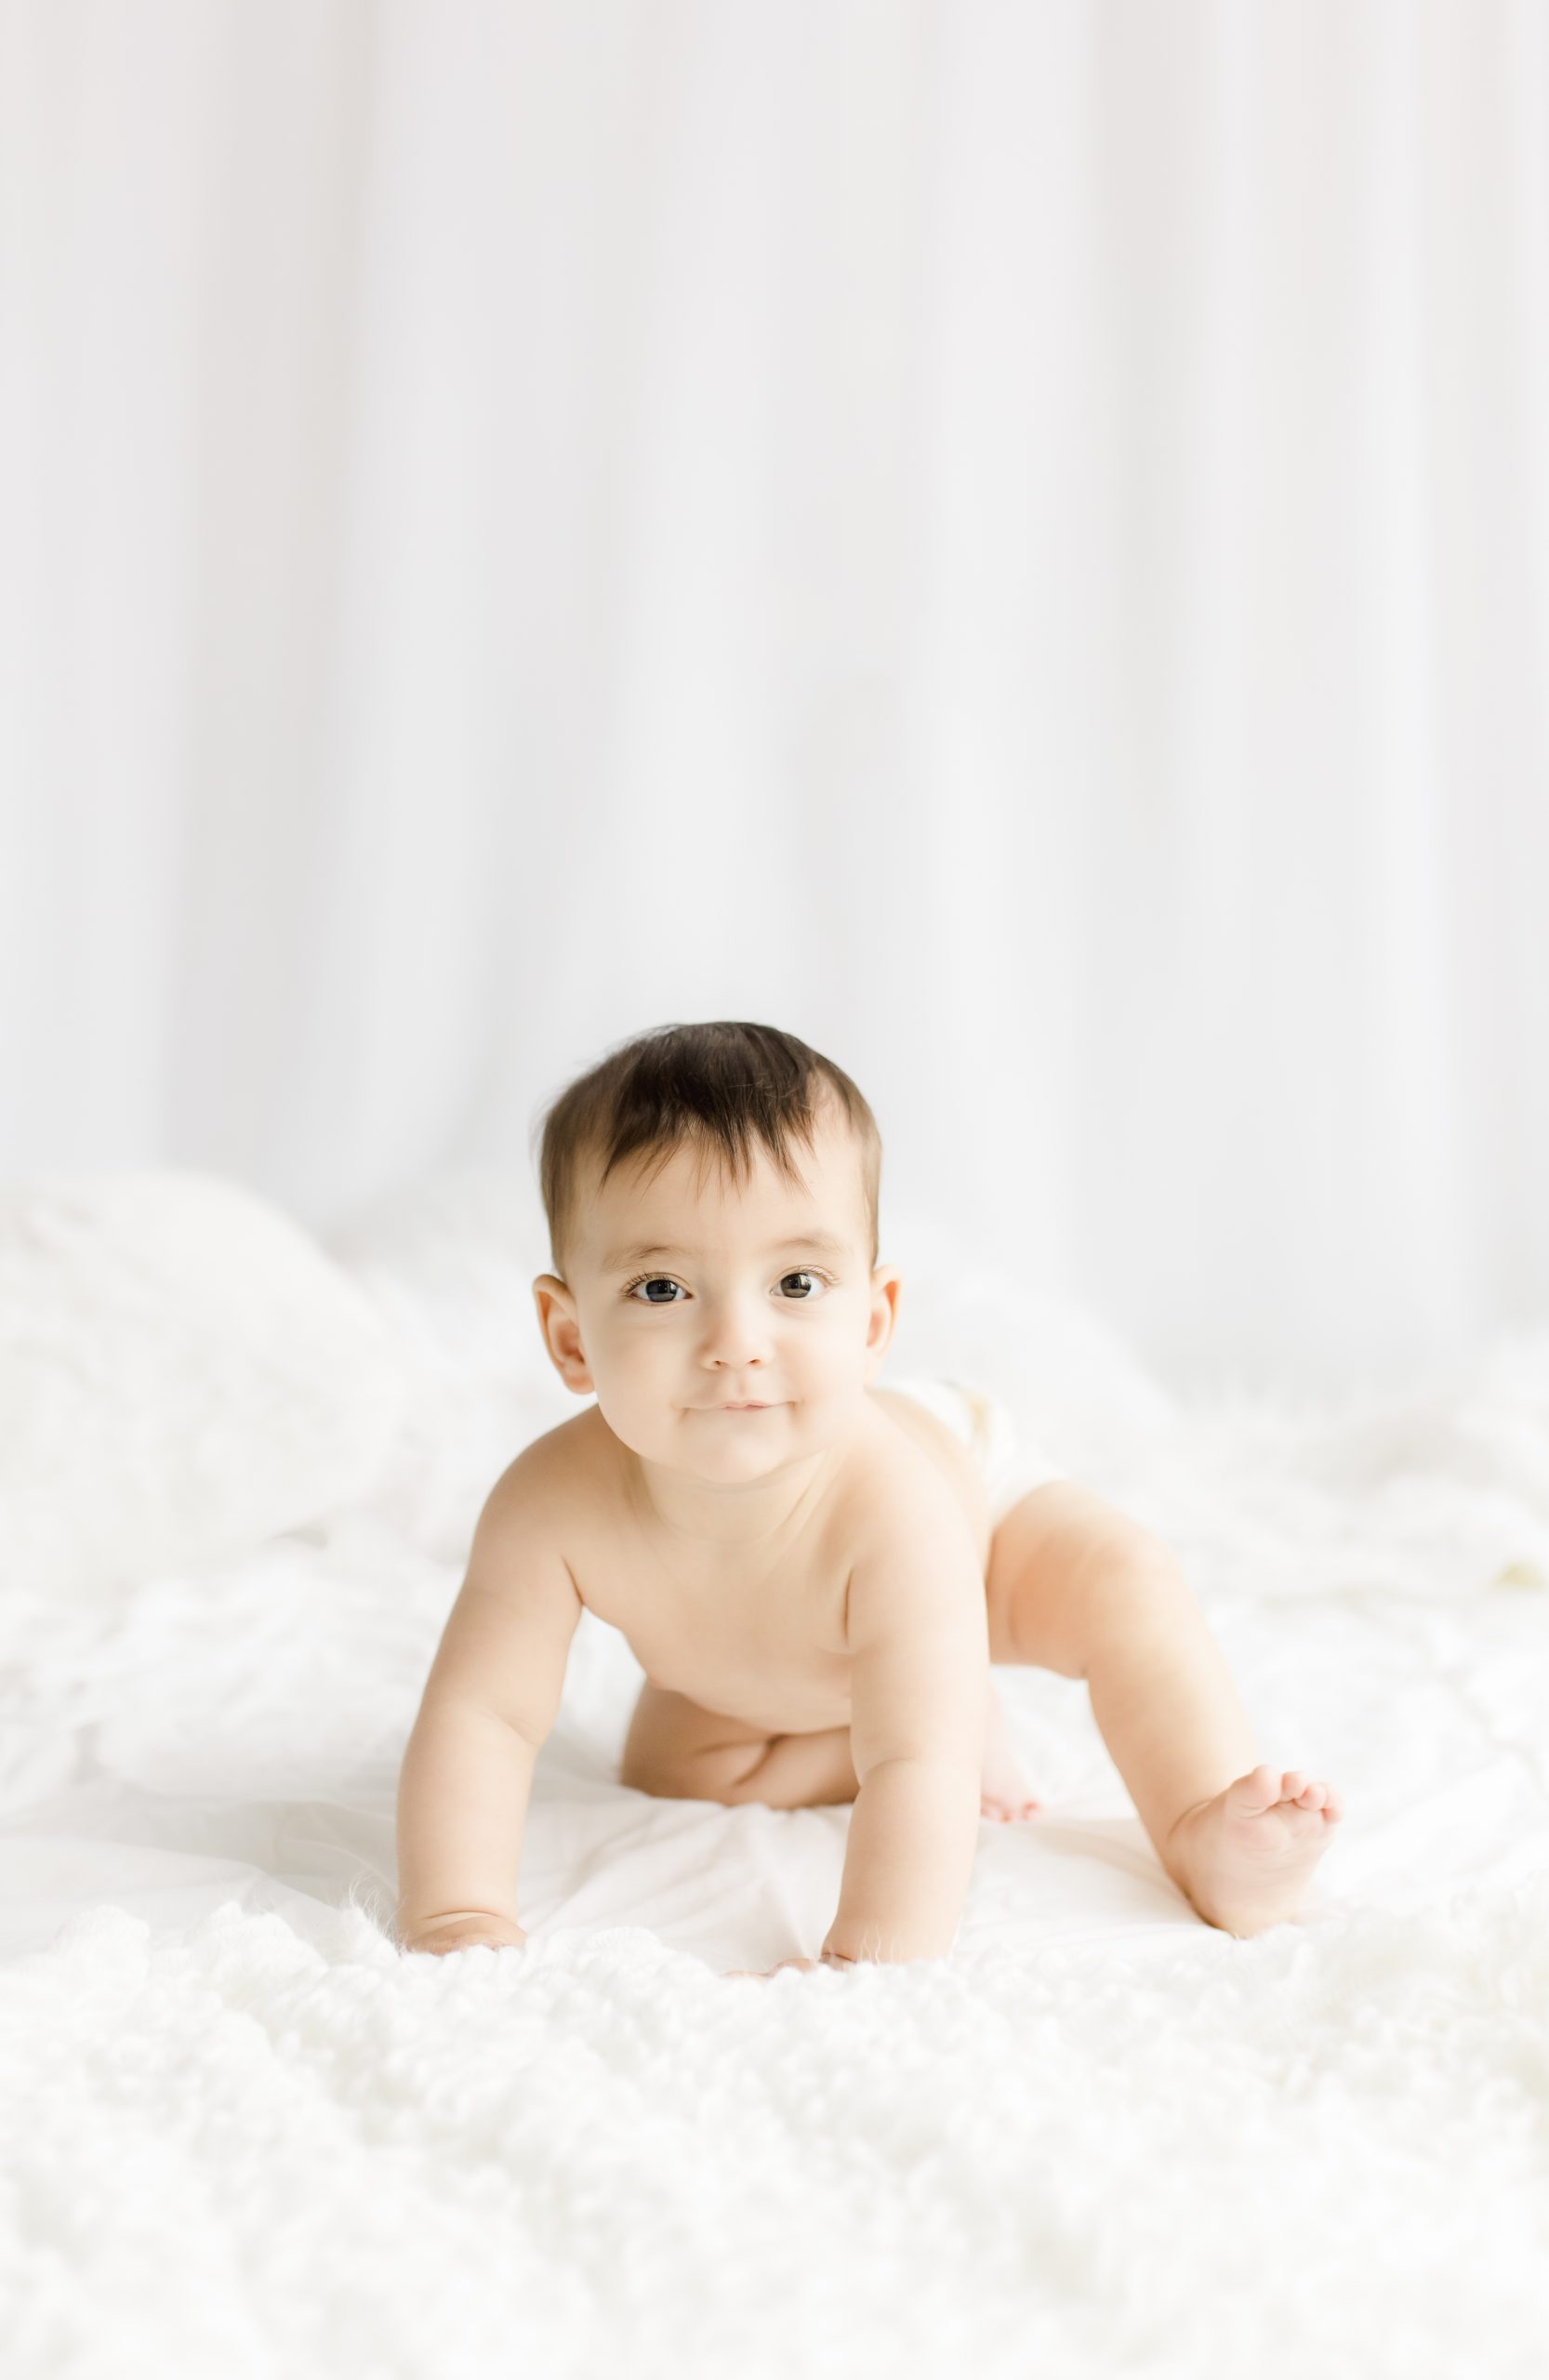 Baby crawling toward camera by Northern Virginia Baby Photographer